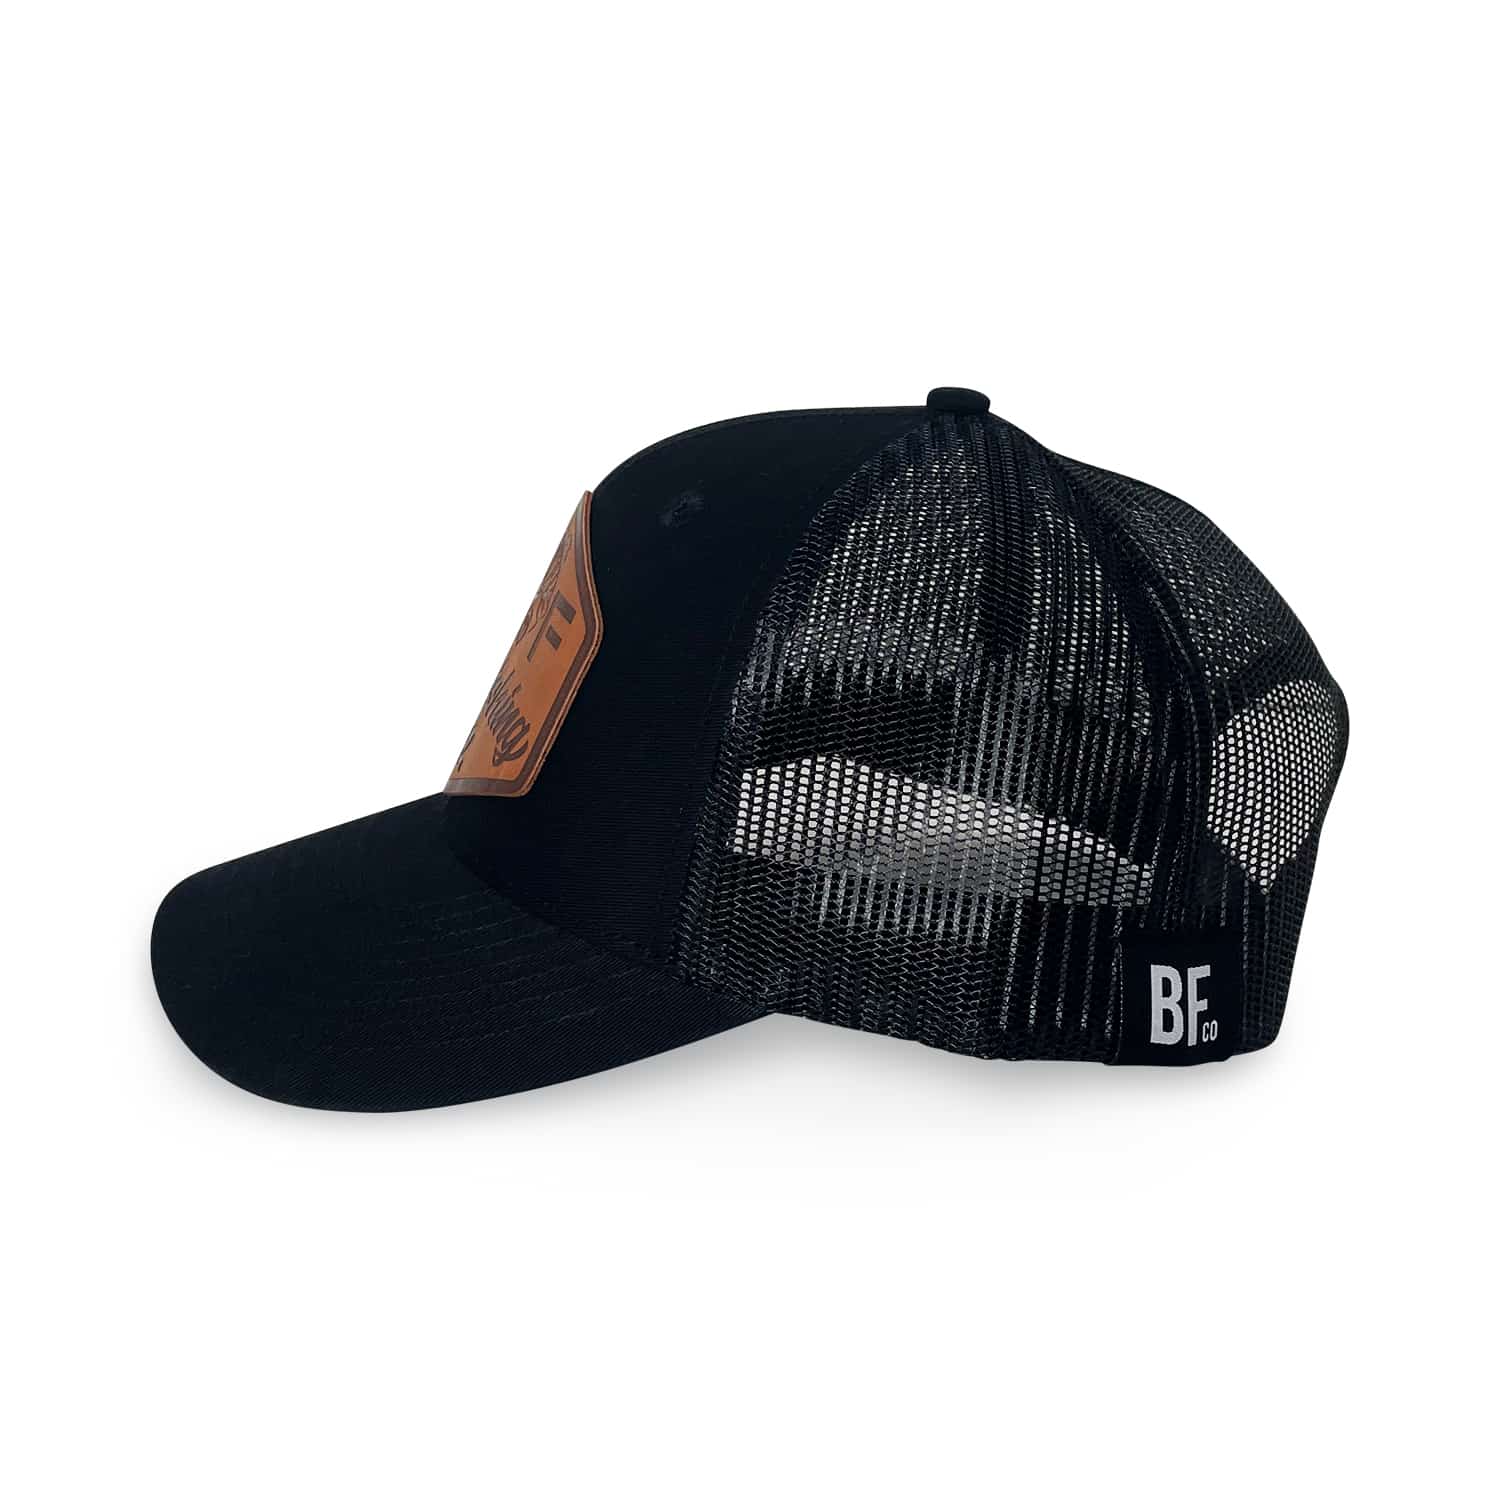 BFco Men's Meshback Leather Logo Fishing Hat - Black